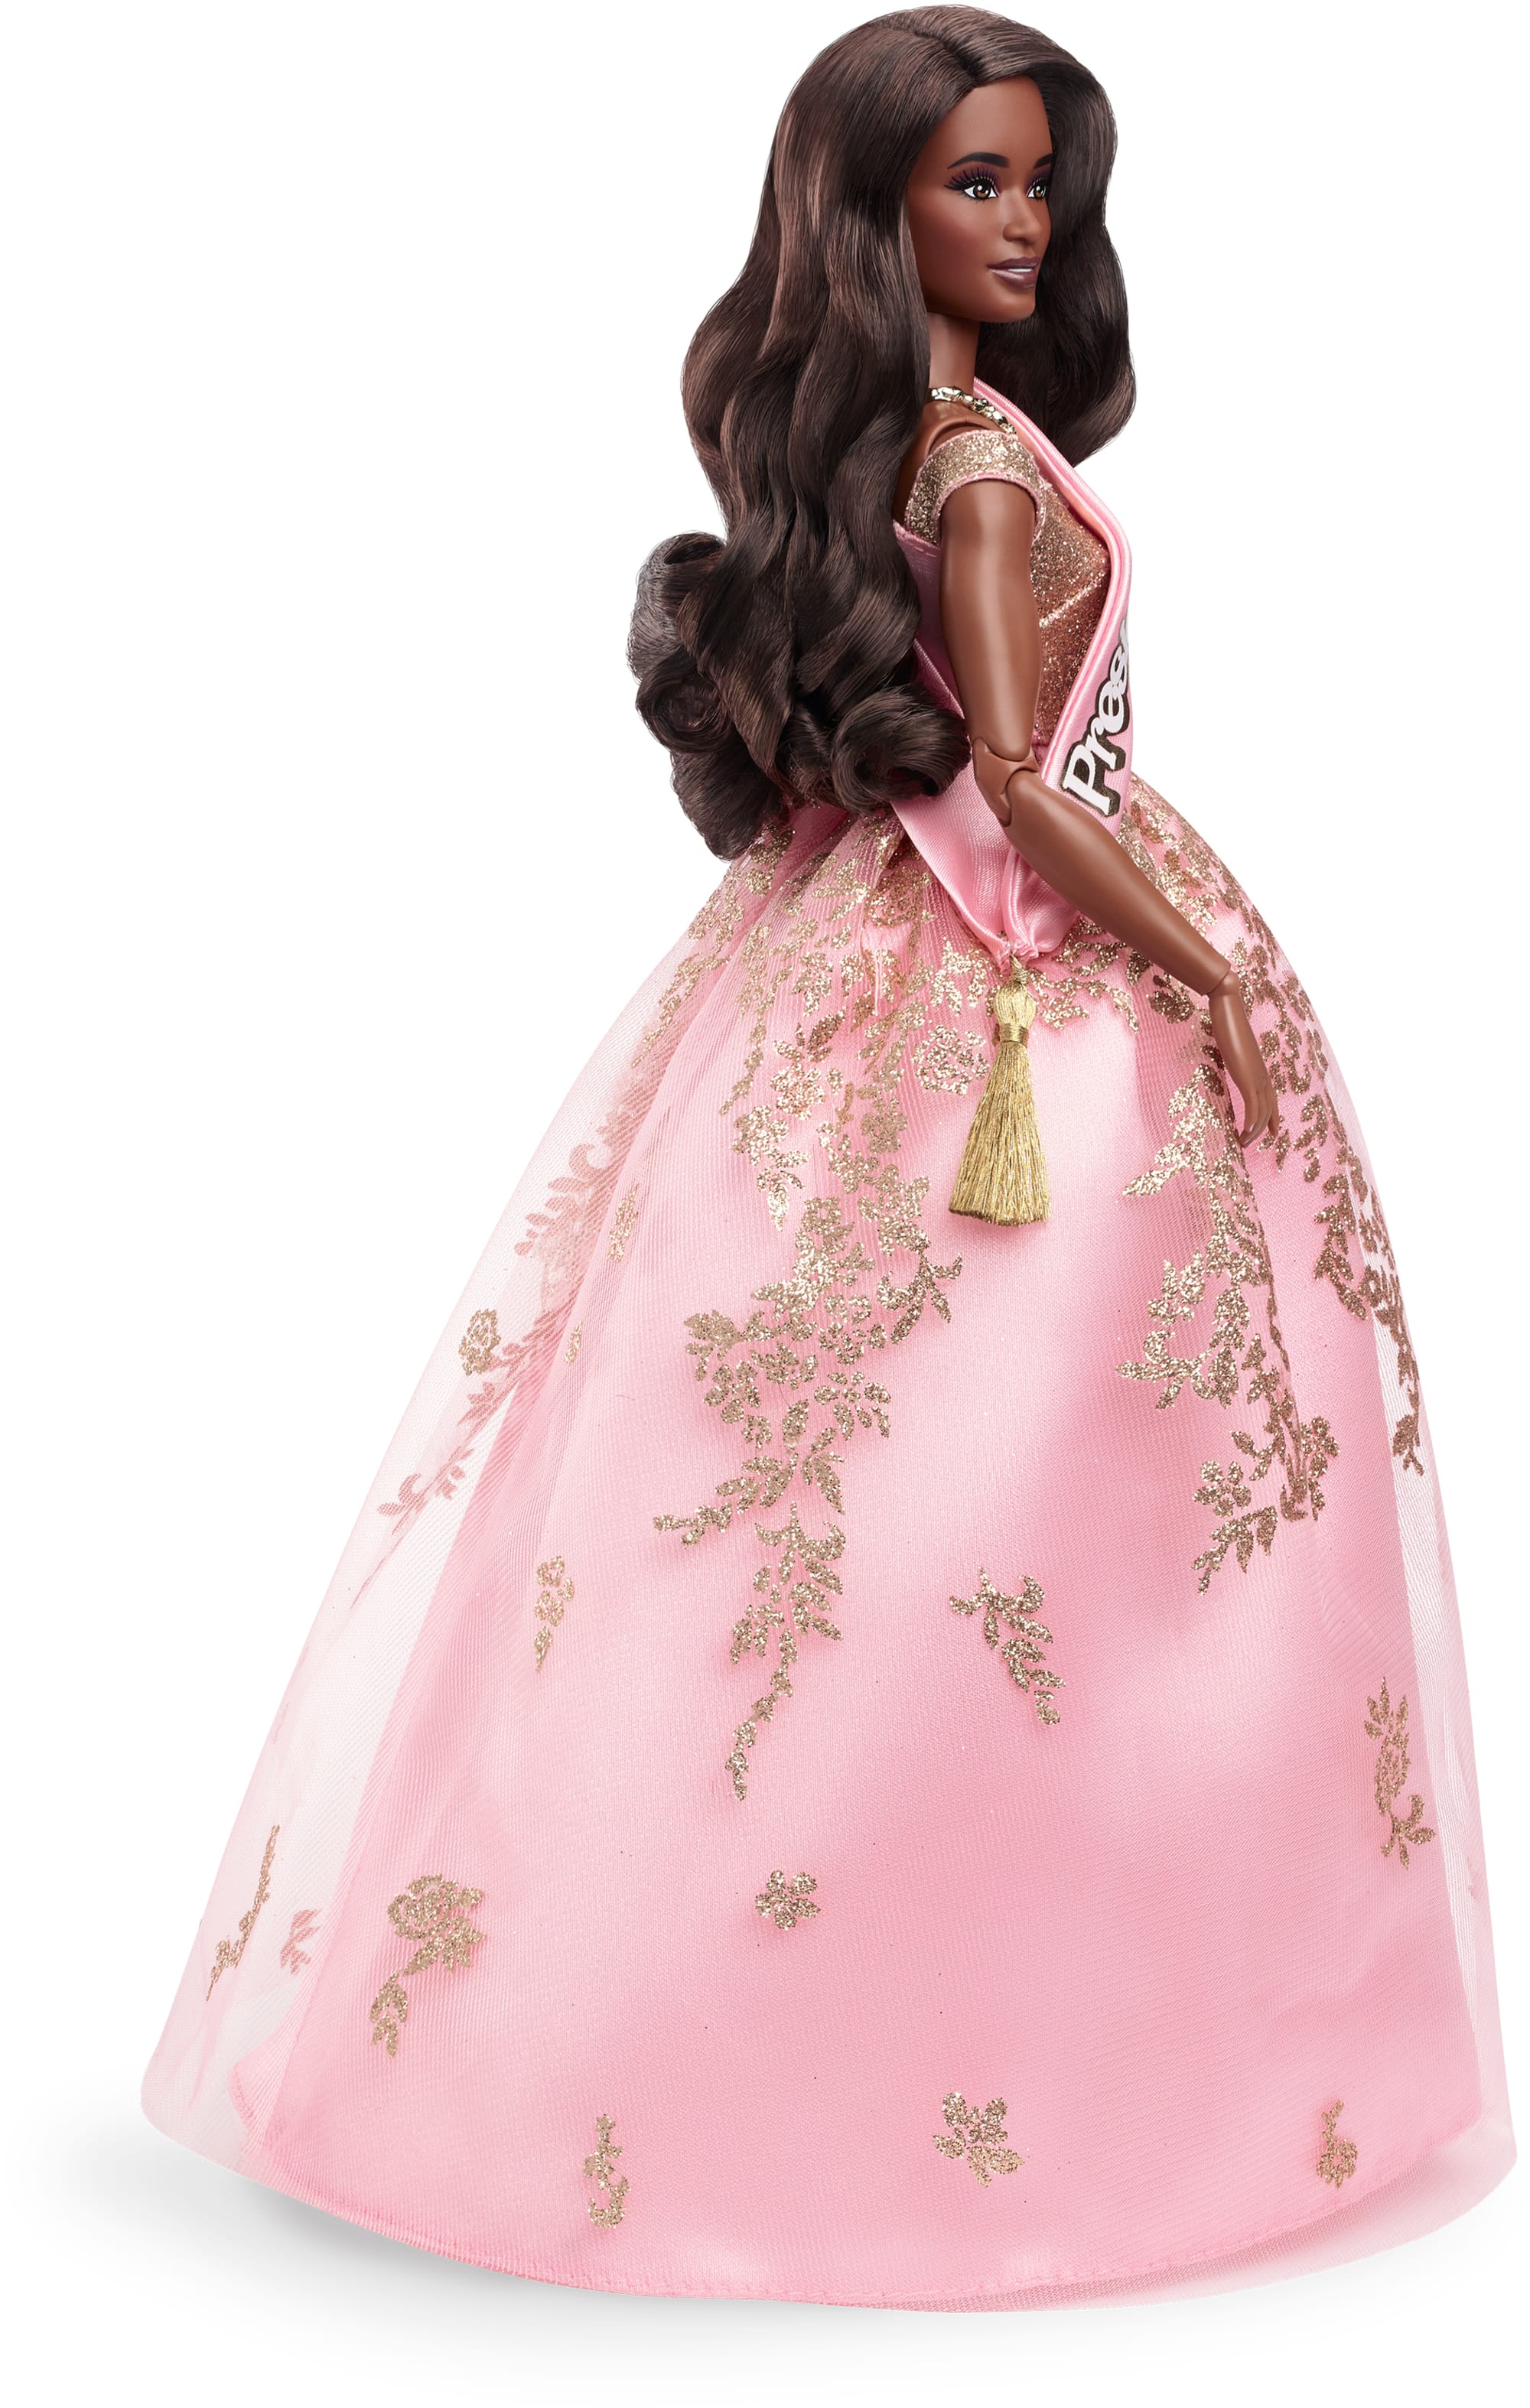 Accor gaan beslissen methodologie President Barbie in Pink and Gold Dress – Barbie The Movie | HPK05 | MATTEL